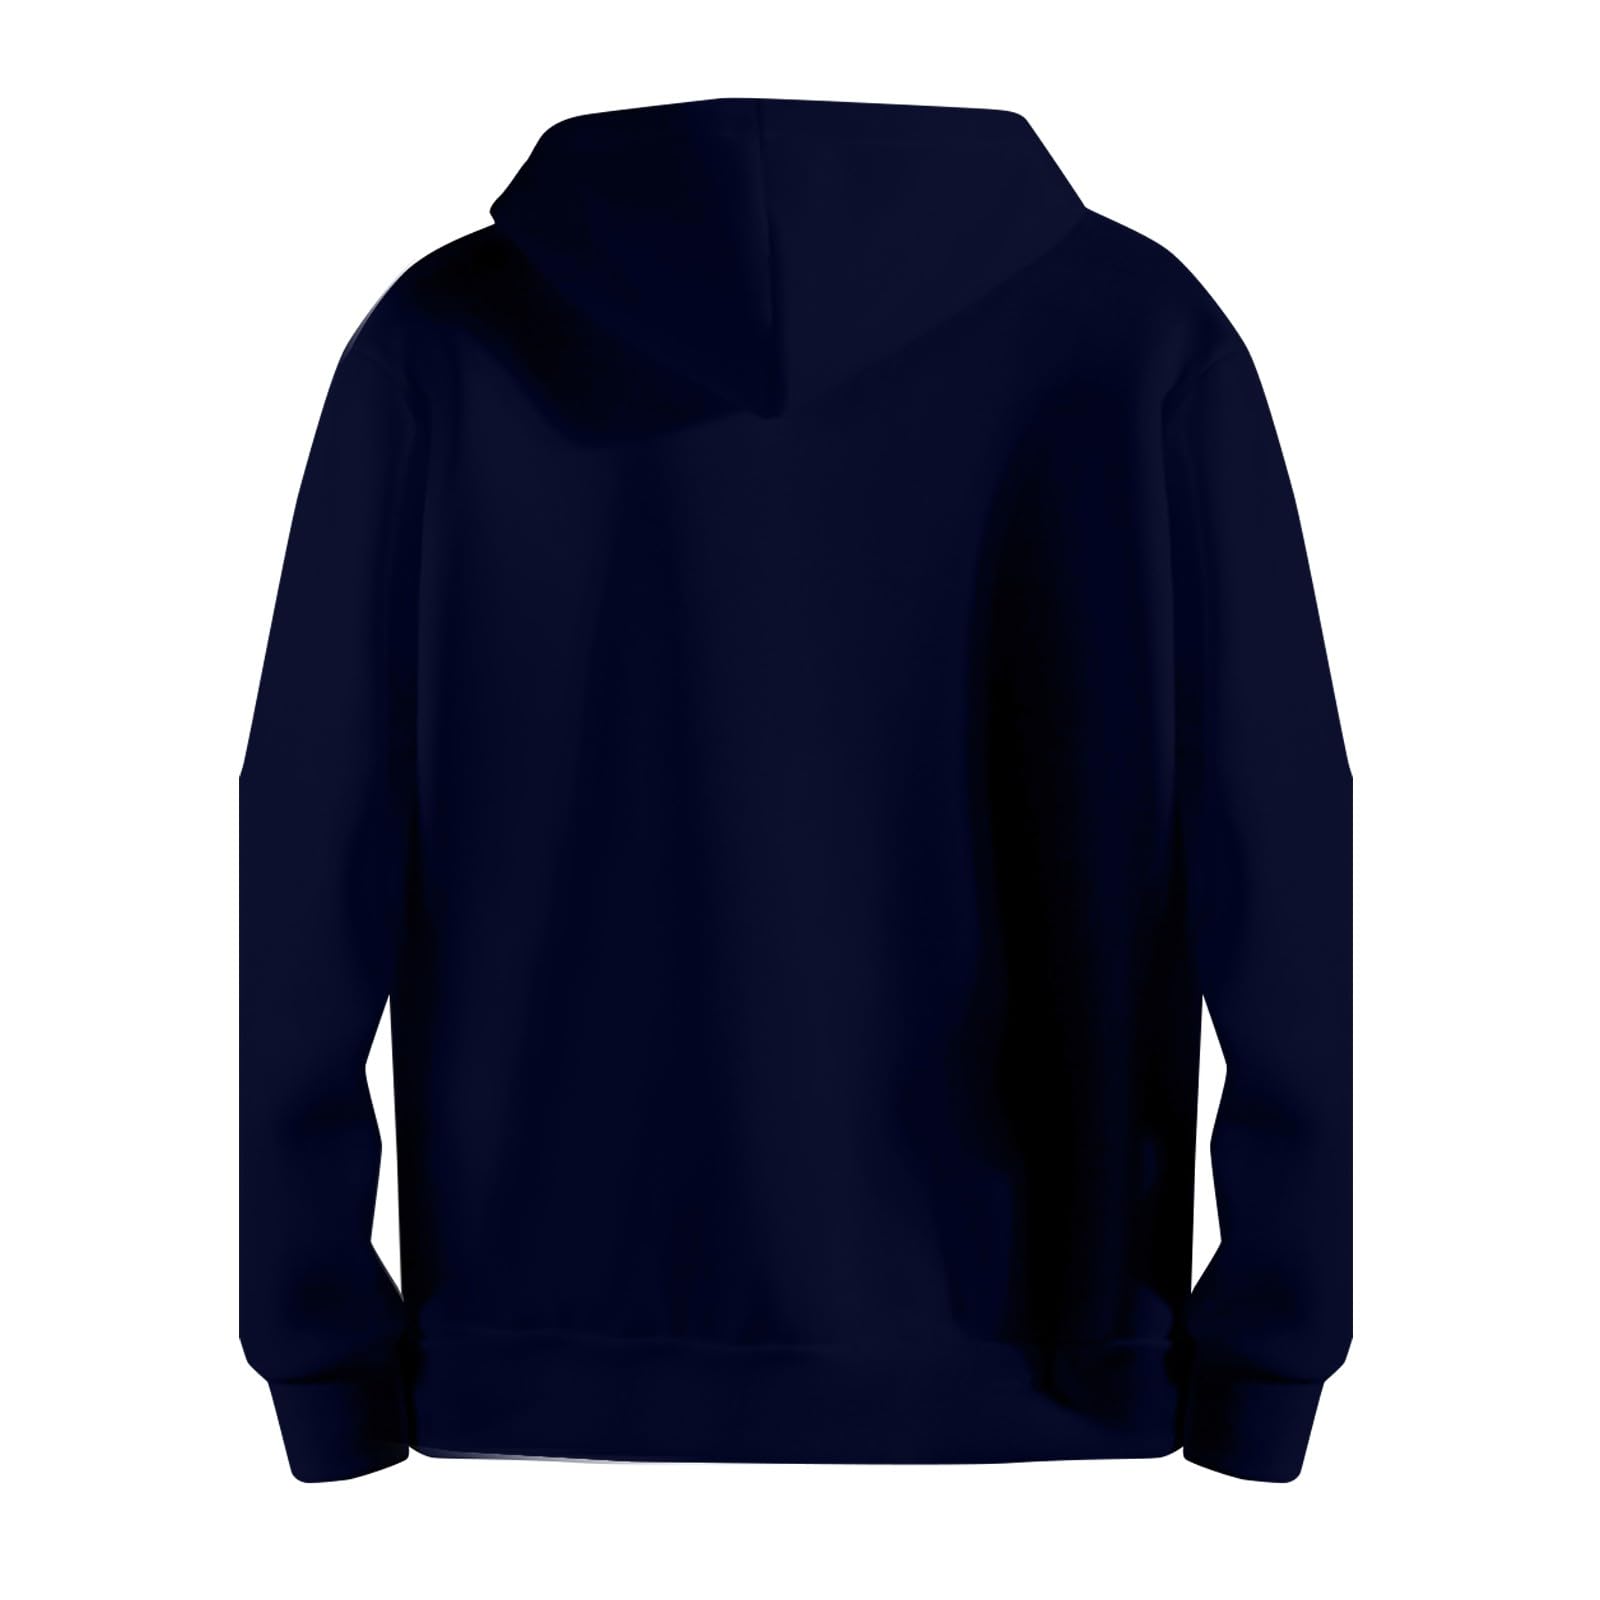 Workout Hoodies For Men Plain Basic Hoodie Full Zip Fleece Sweatshirt Casual Hooded Outerwear Jacket With Pocket